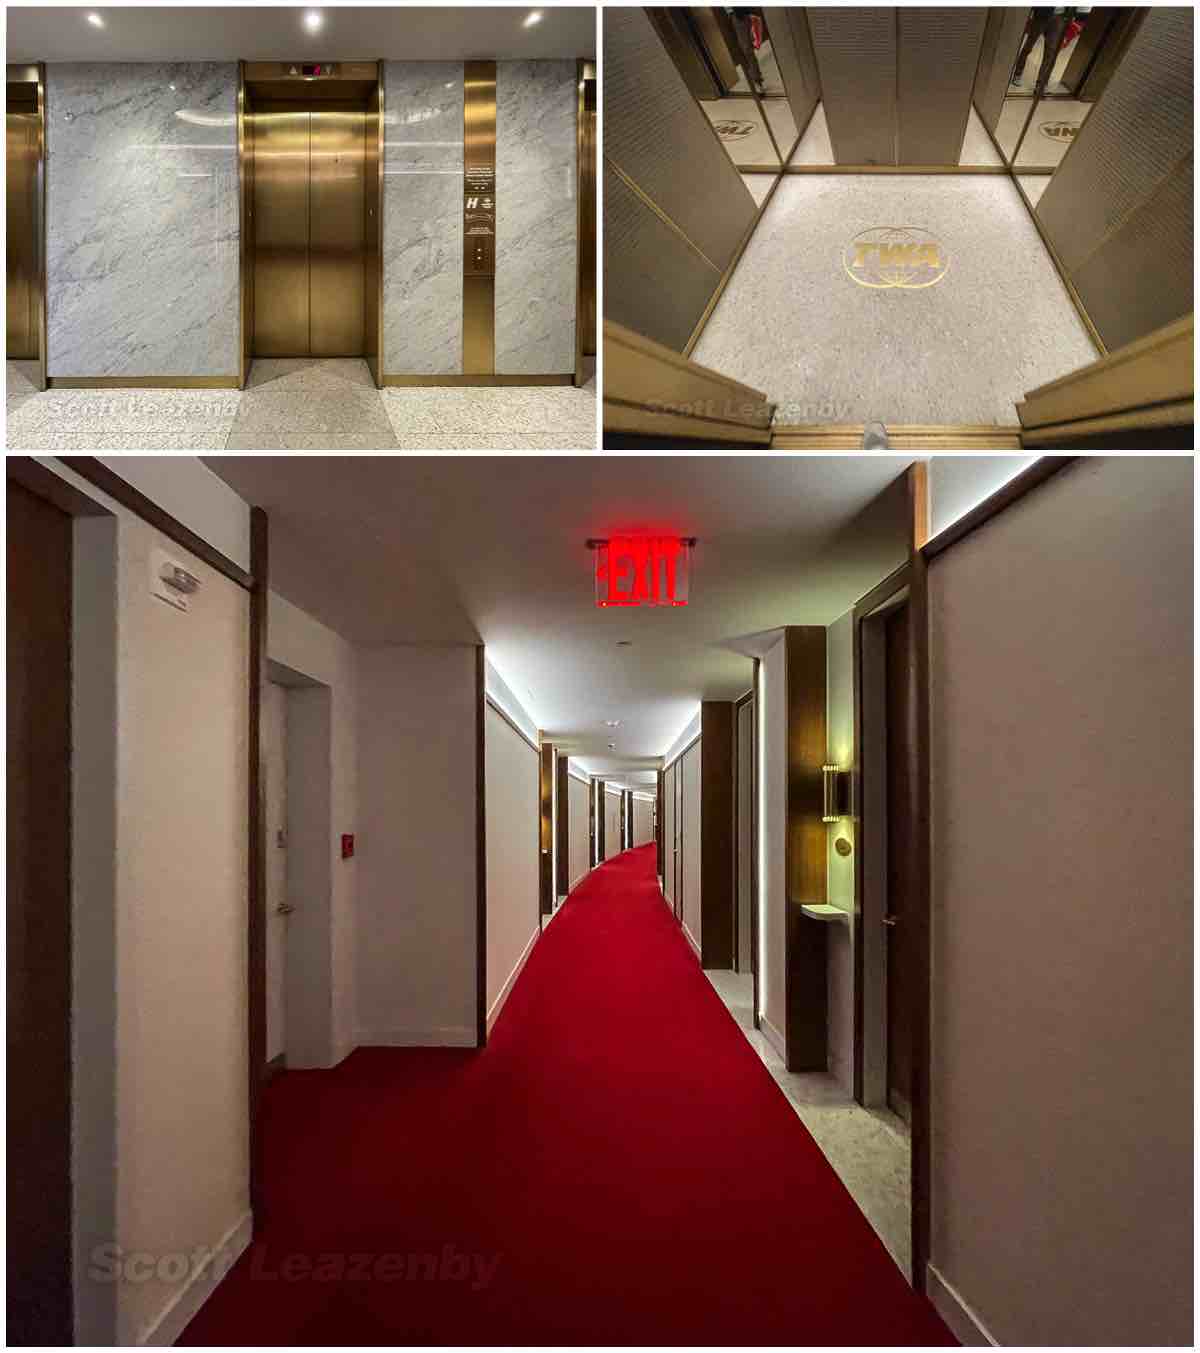 Twa hotel elevators and a guest room hallway